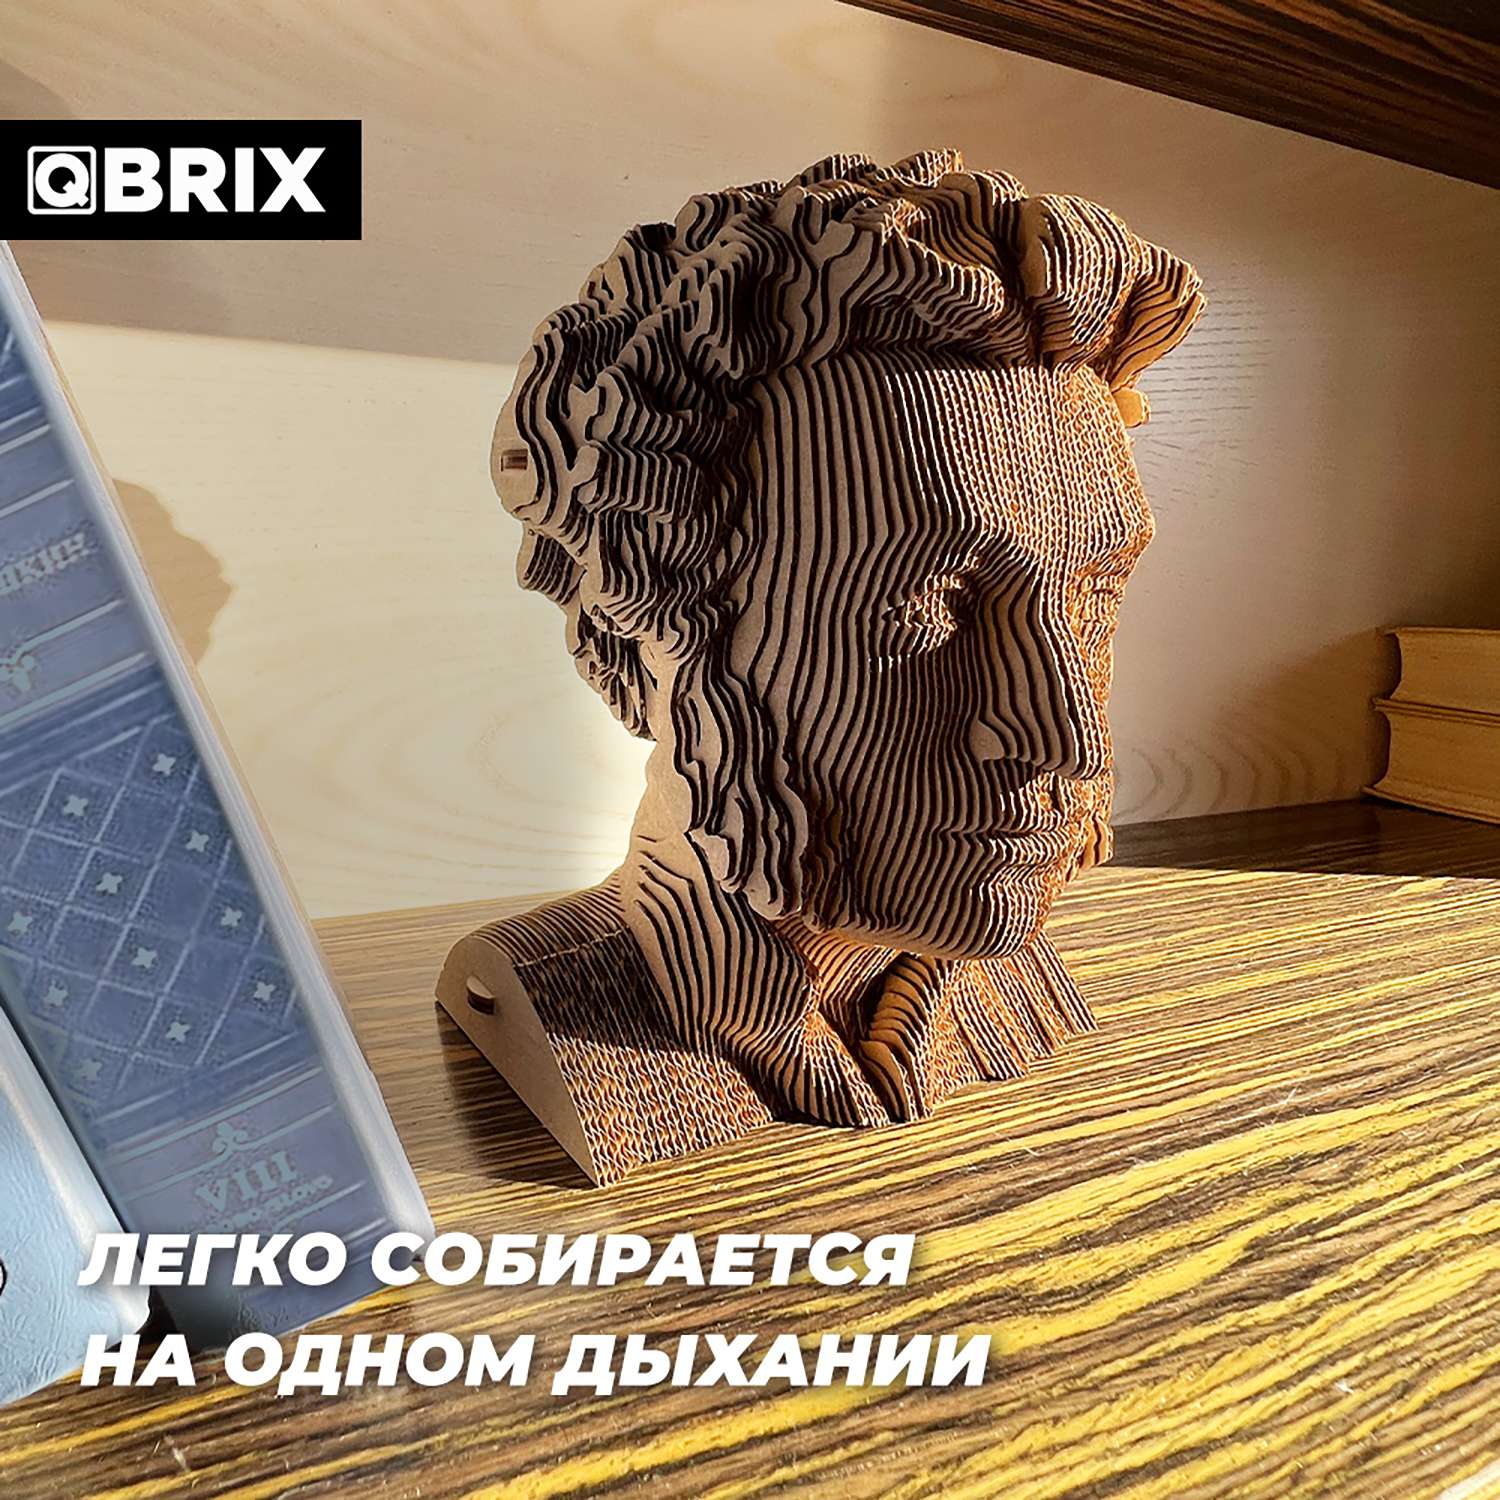 Конструктор QBRIX 3D картонный Александр Пушкин 20014 20014 - фото 5